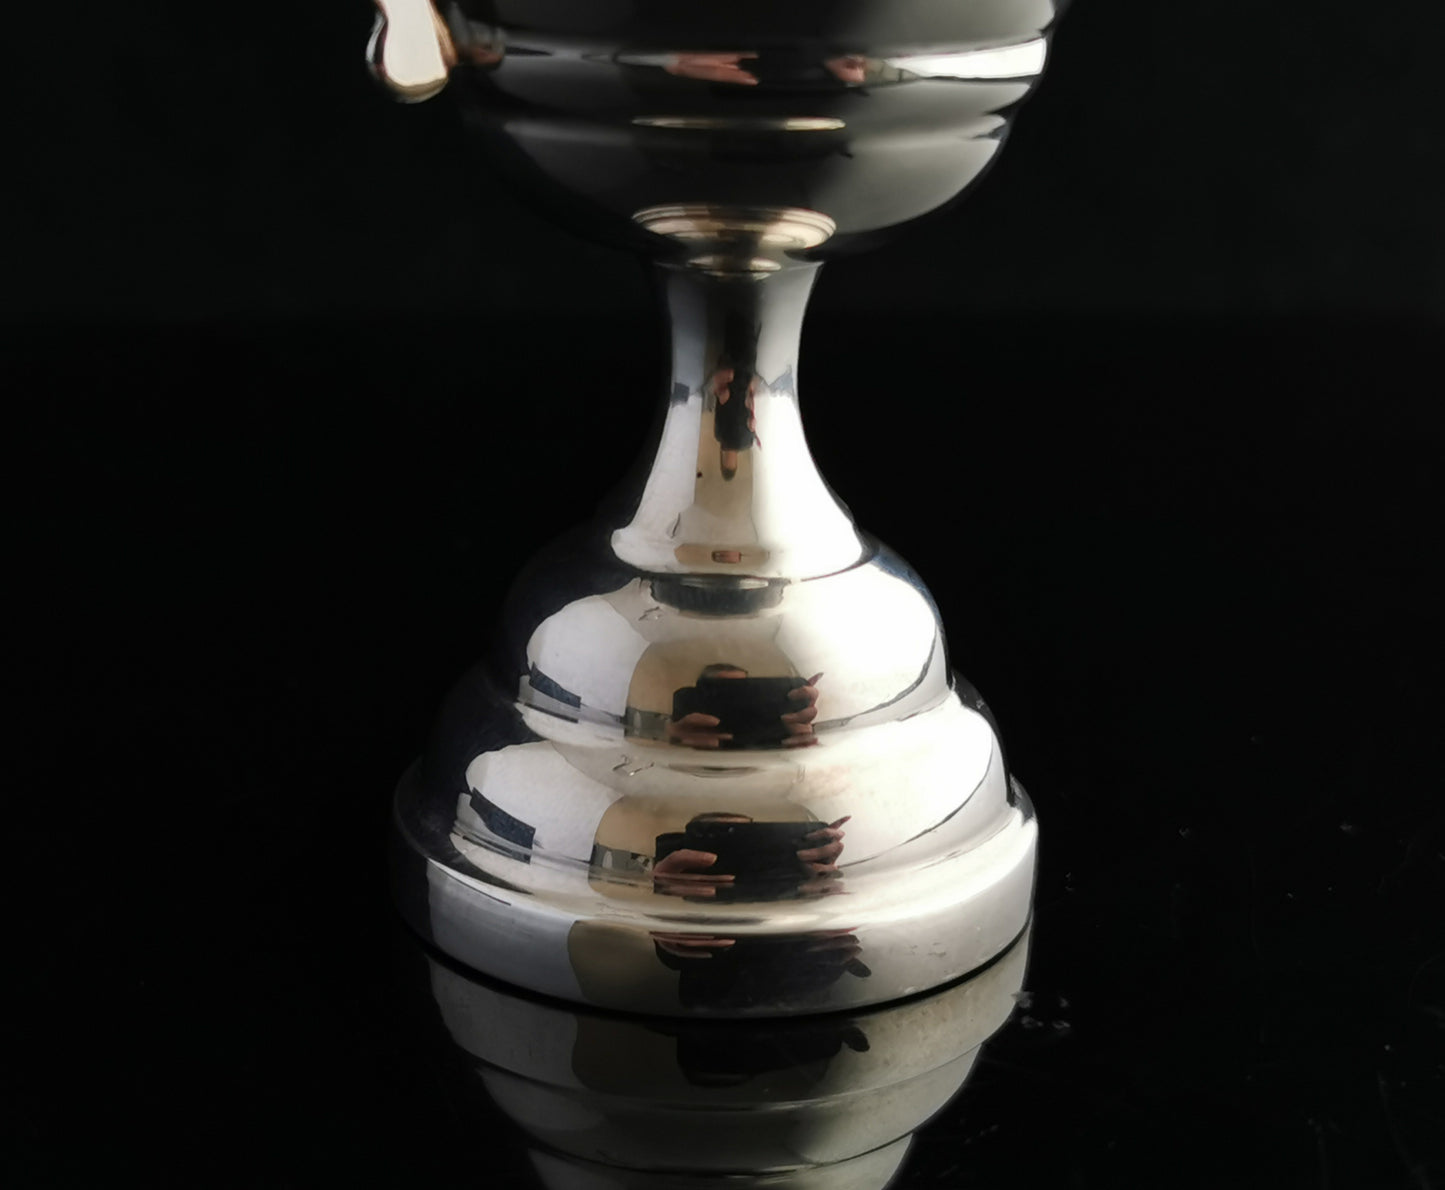 Vintage 1940s Sterling silver trophy cup